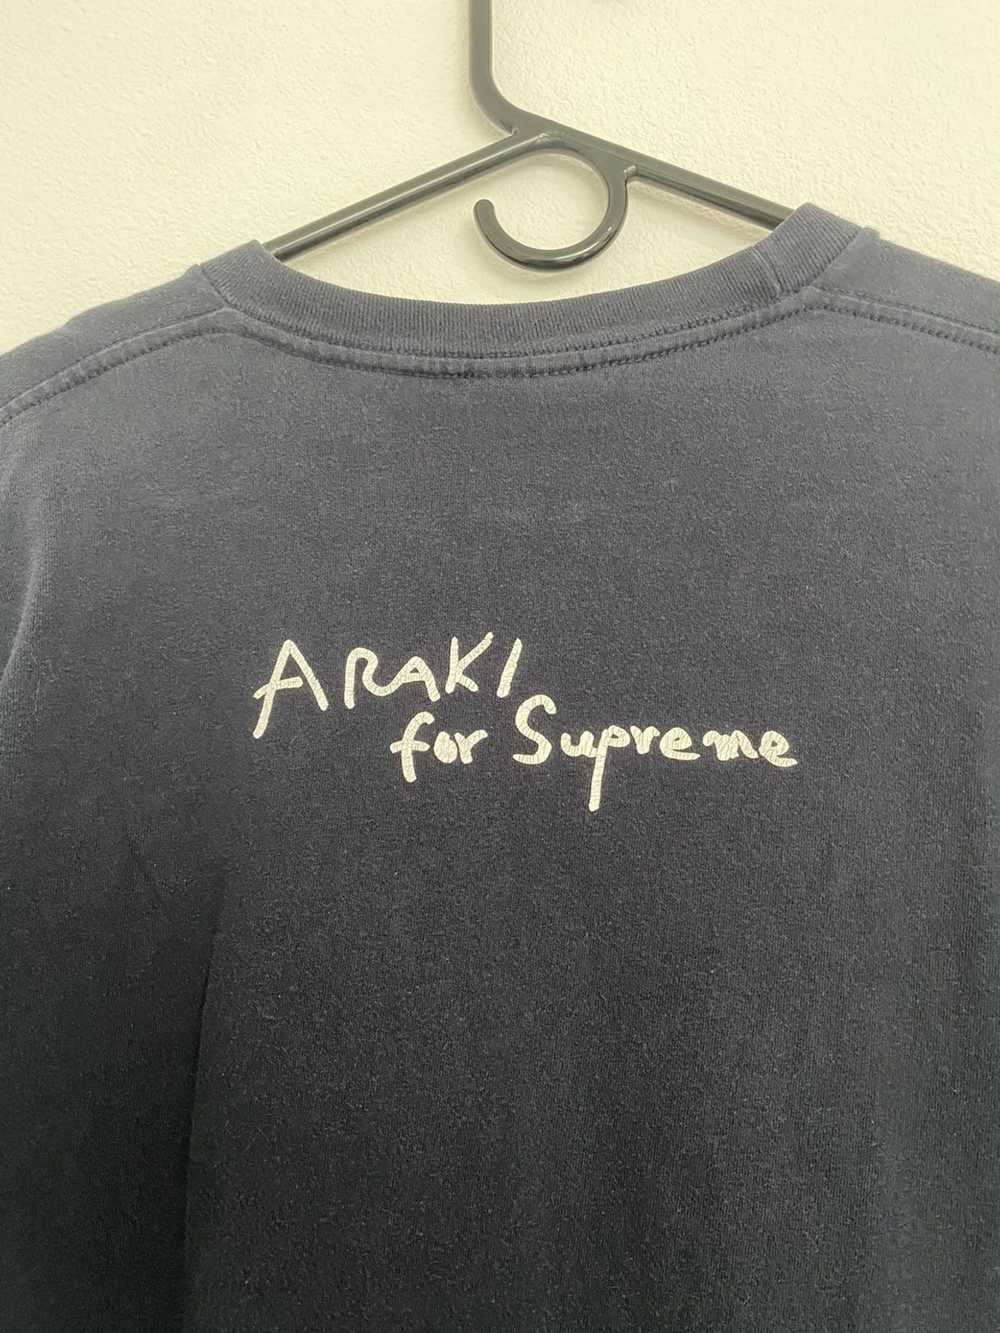 Supreme Supreme X Akari Tee - image 4